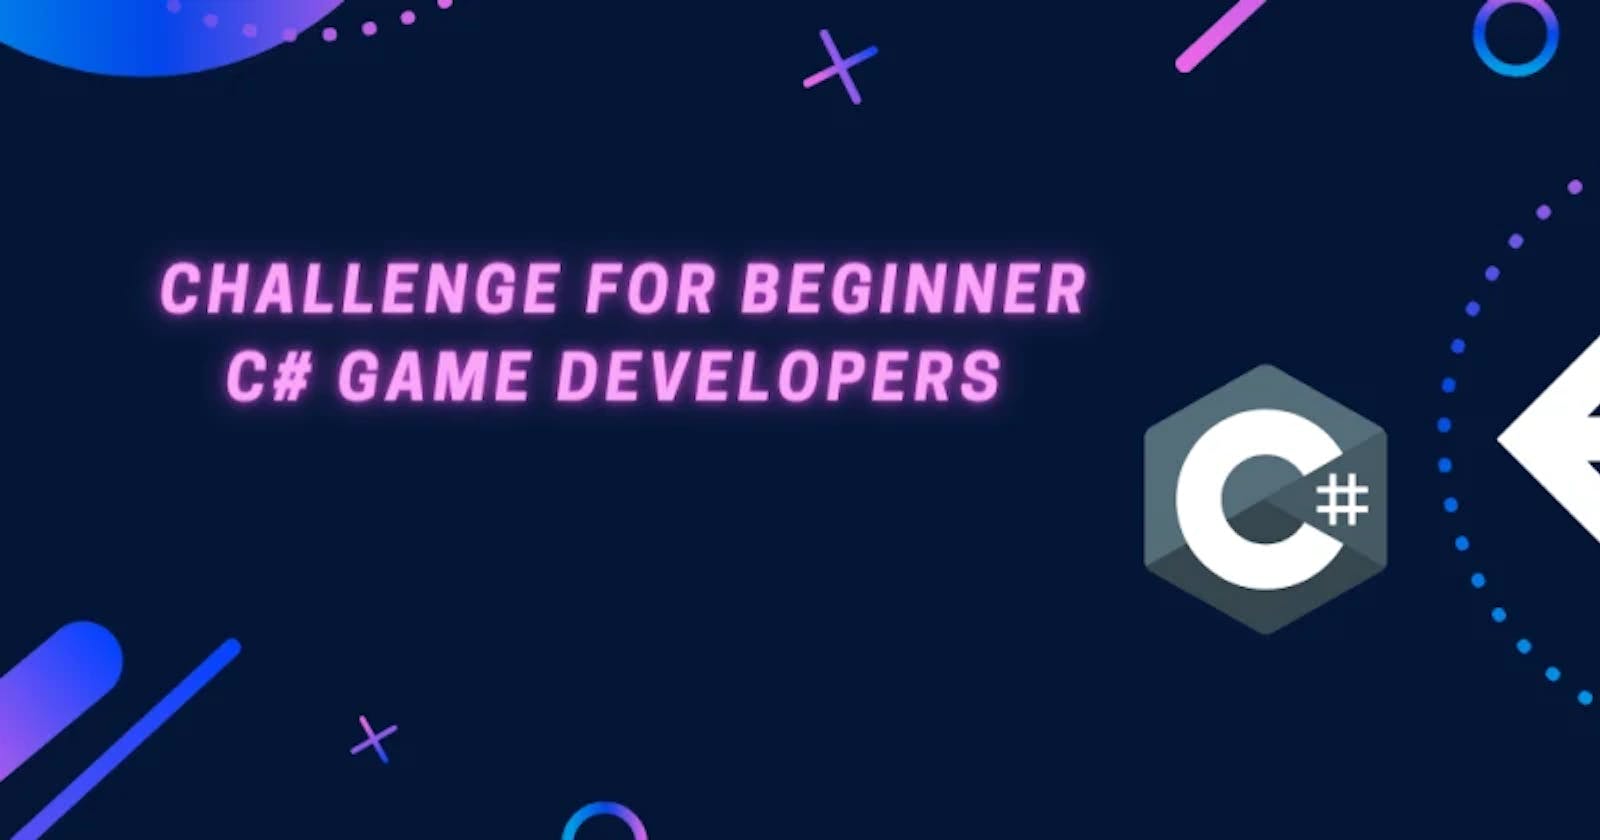 Begin your C# Game Development Journey Using This Challenge